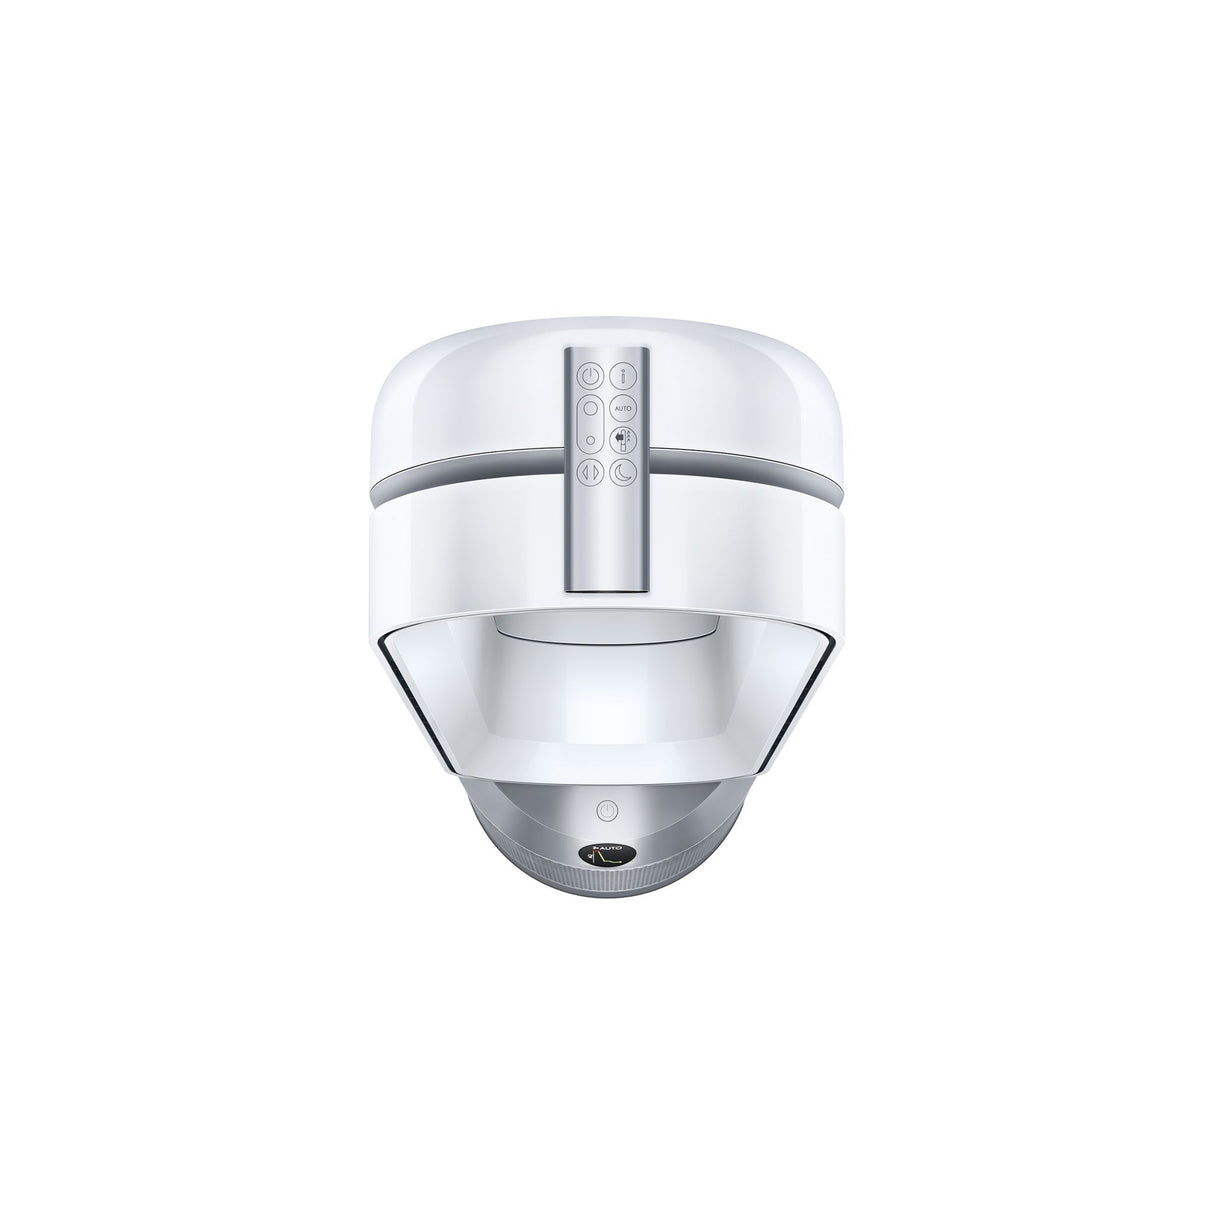 Dyson TP07 - Purifier Cool  Air Purifier (White/Silver)